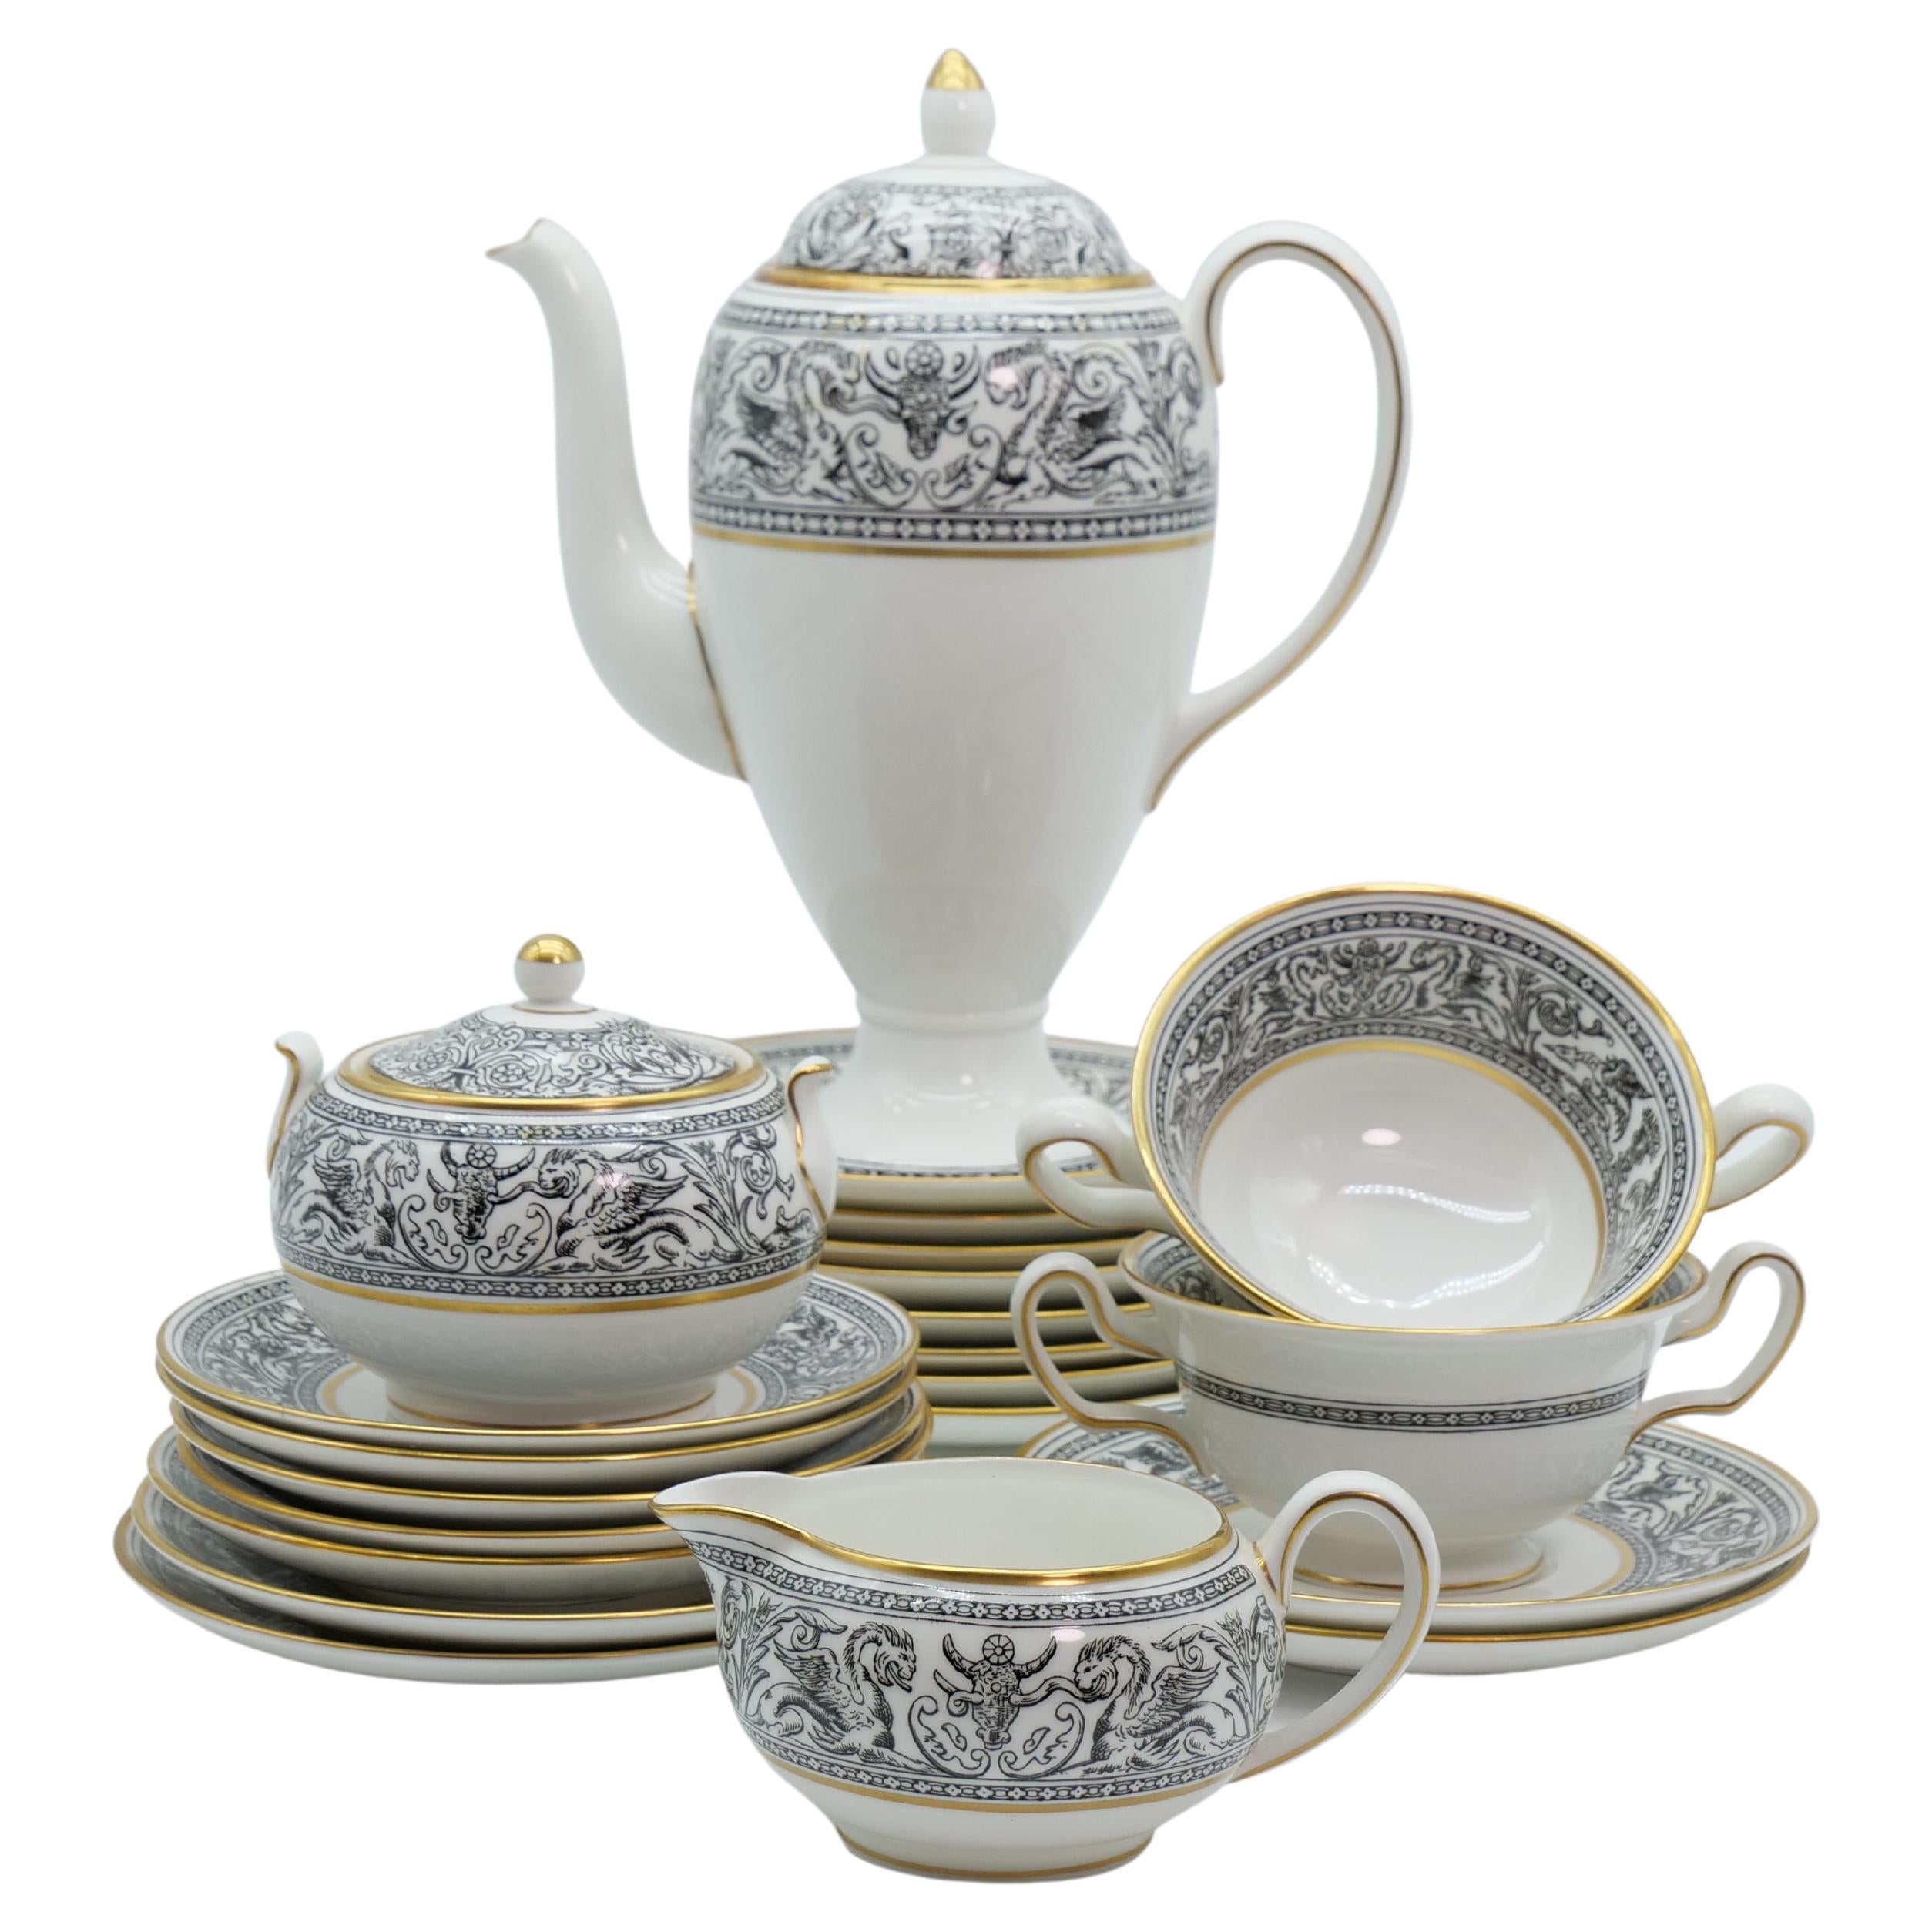 Wedgwood Porcelain Tableware Dinner Service For 12 People For Sale 5